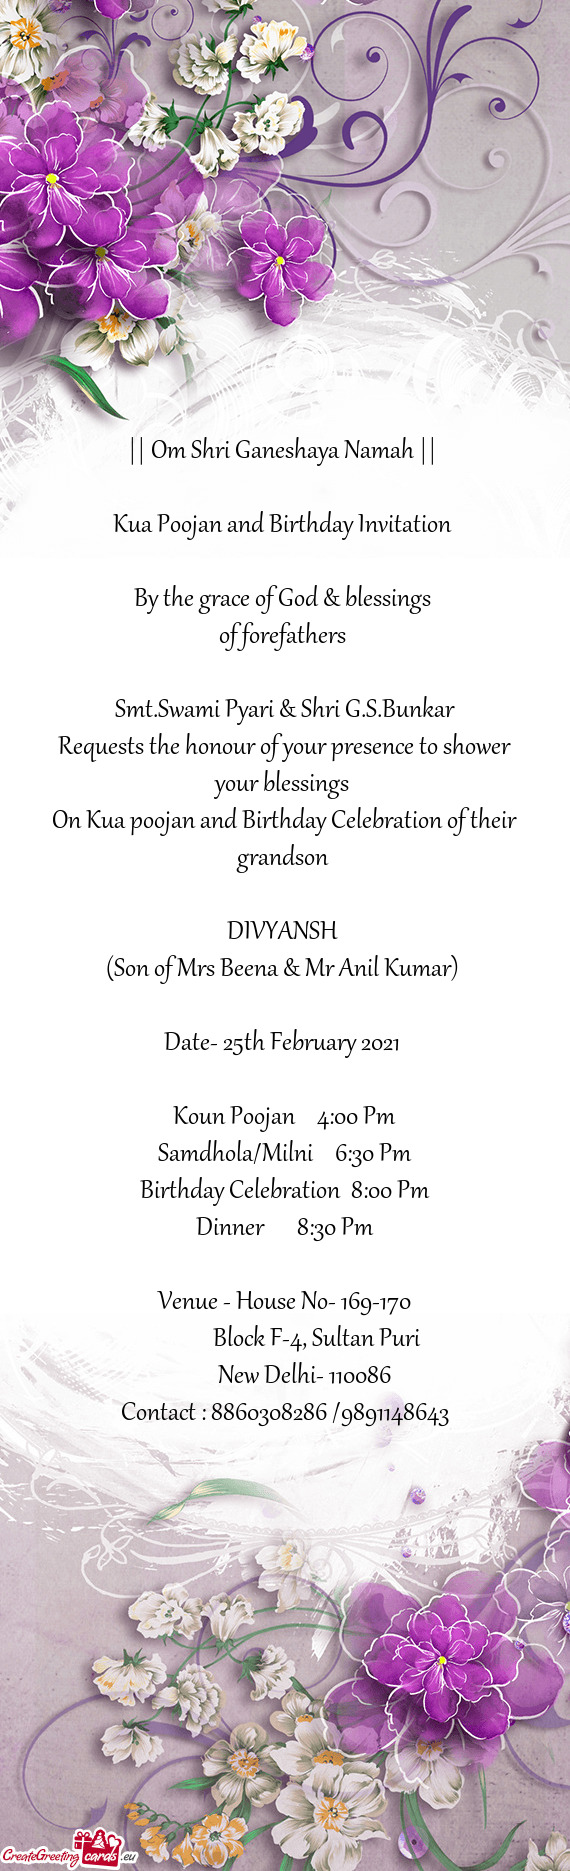 Kua Poojan and Birthday Invitation